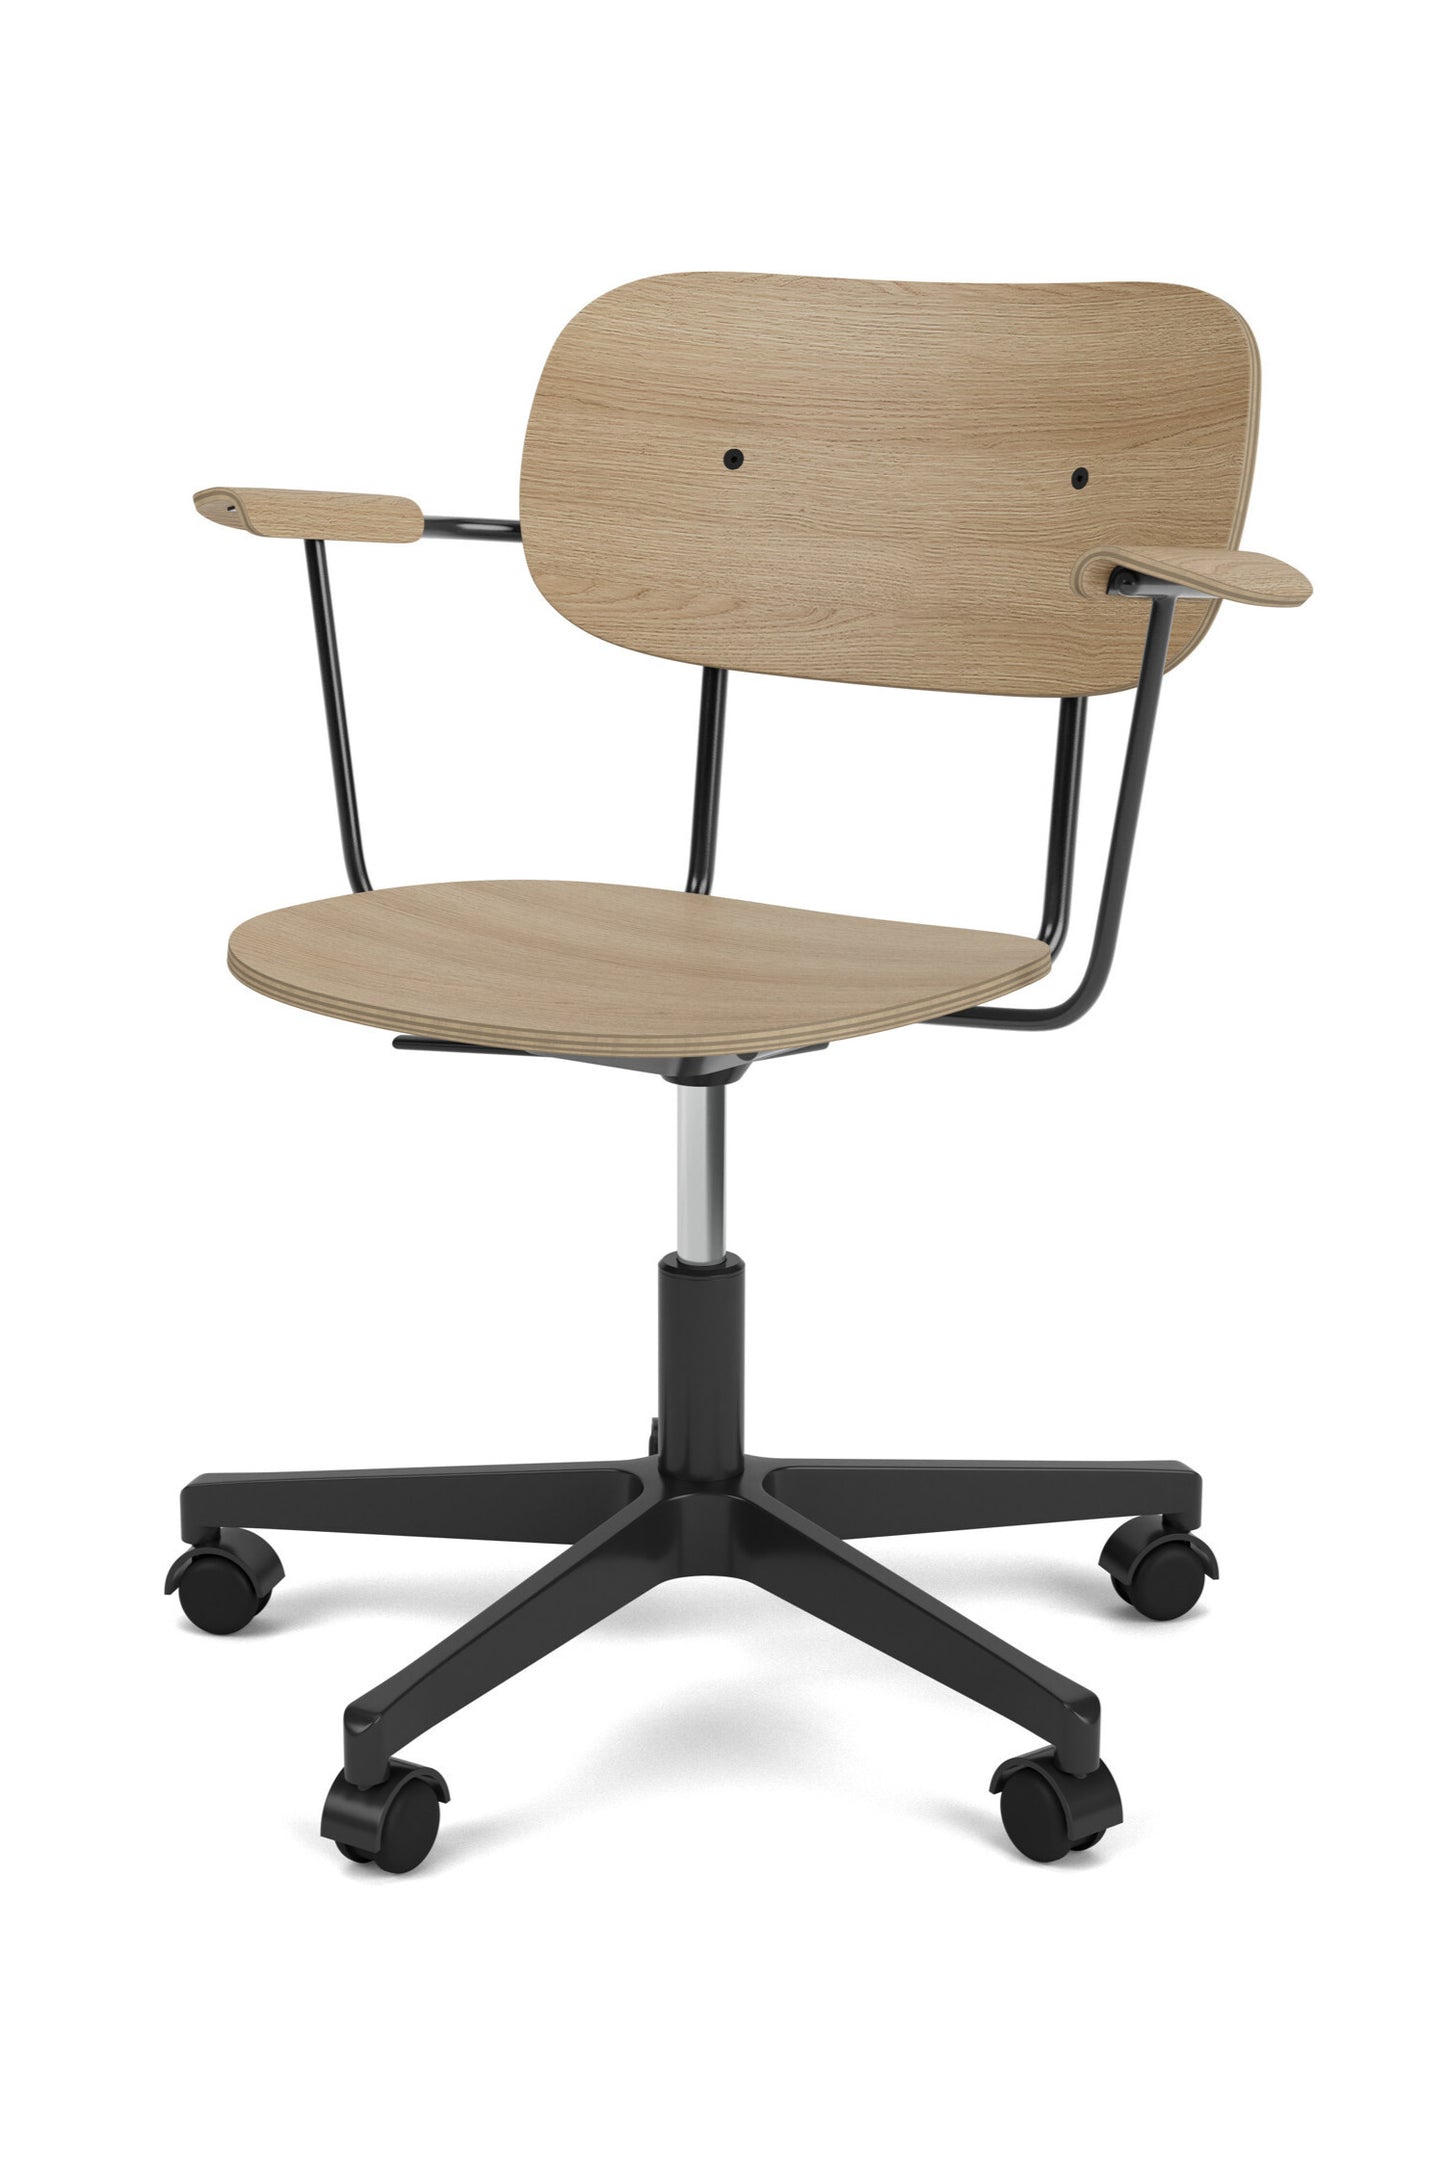  Co Task Chair veneer natural oak with brown veneer and polished aluminum base.